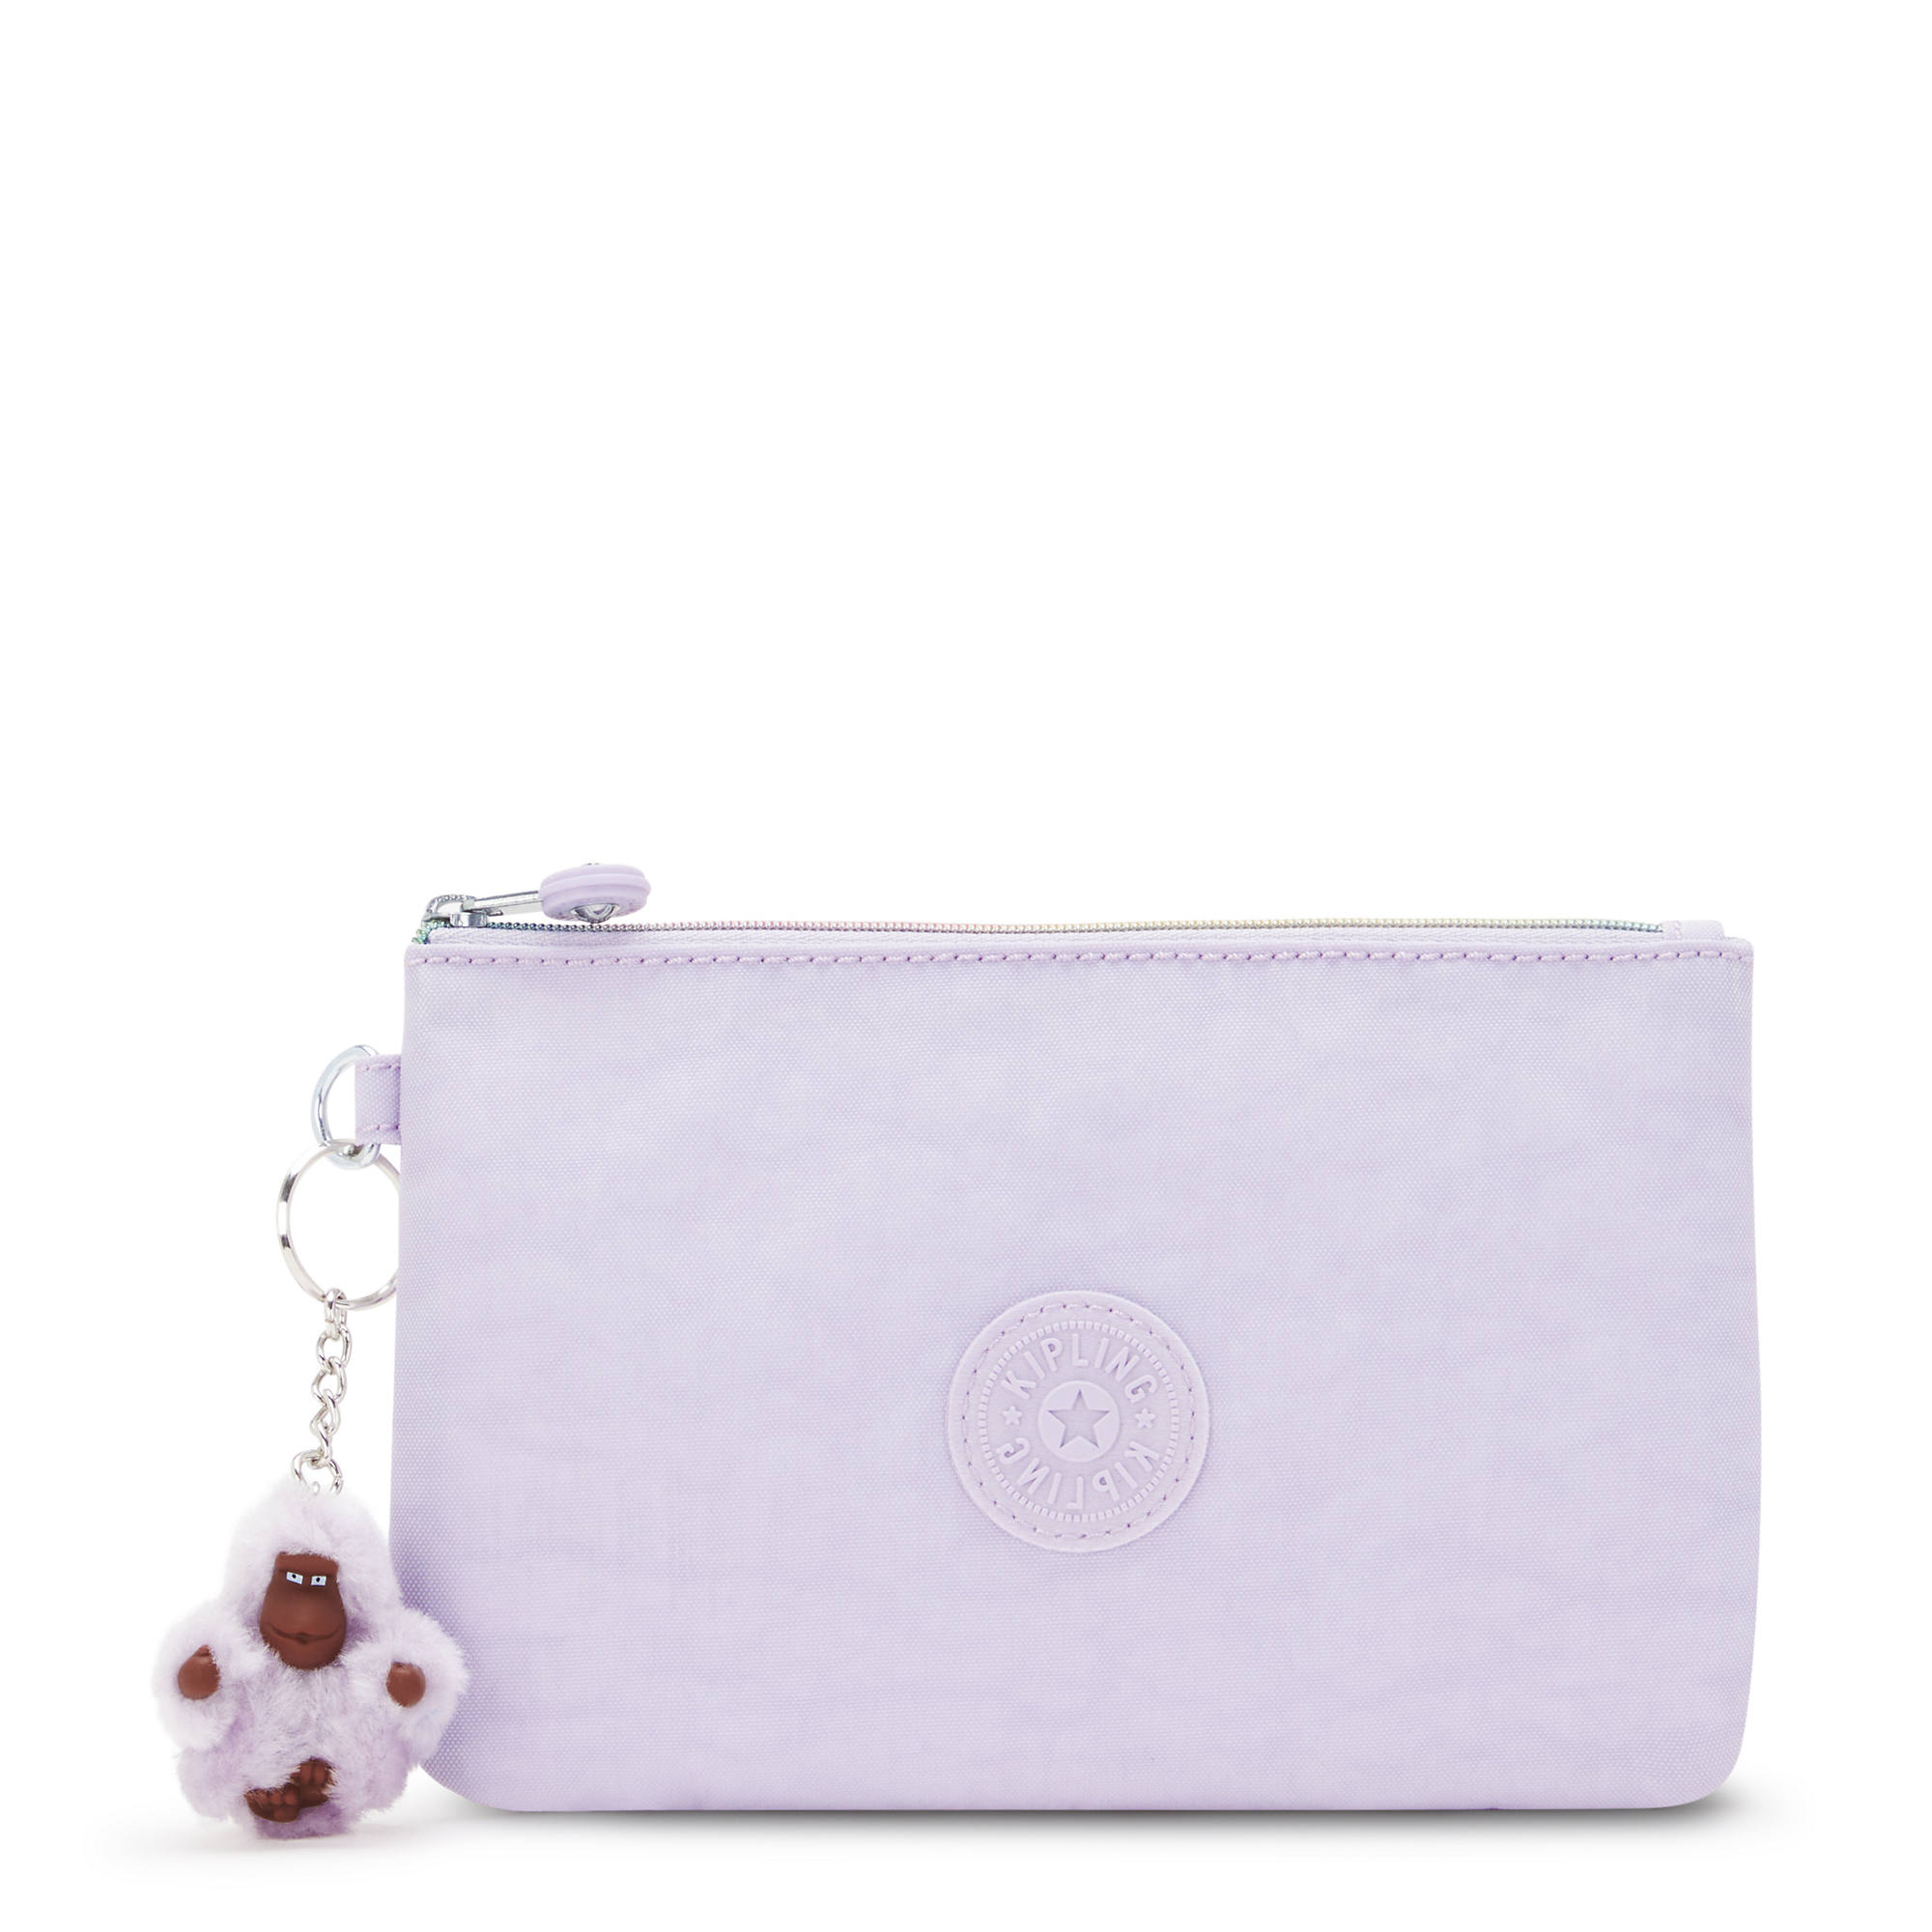 My new purse I got. Kipling U.S.A. Jasira Medium Top Zip Travel Bag Berry  Purple | Bags, Handbag, Kipling bags